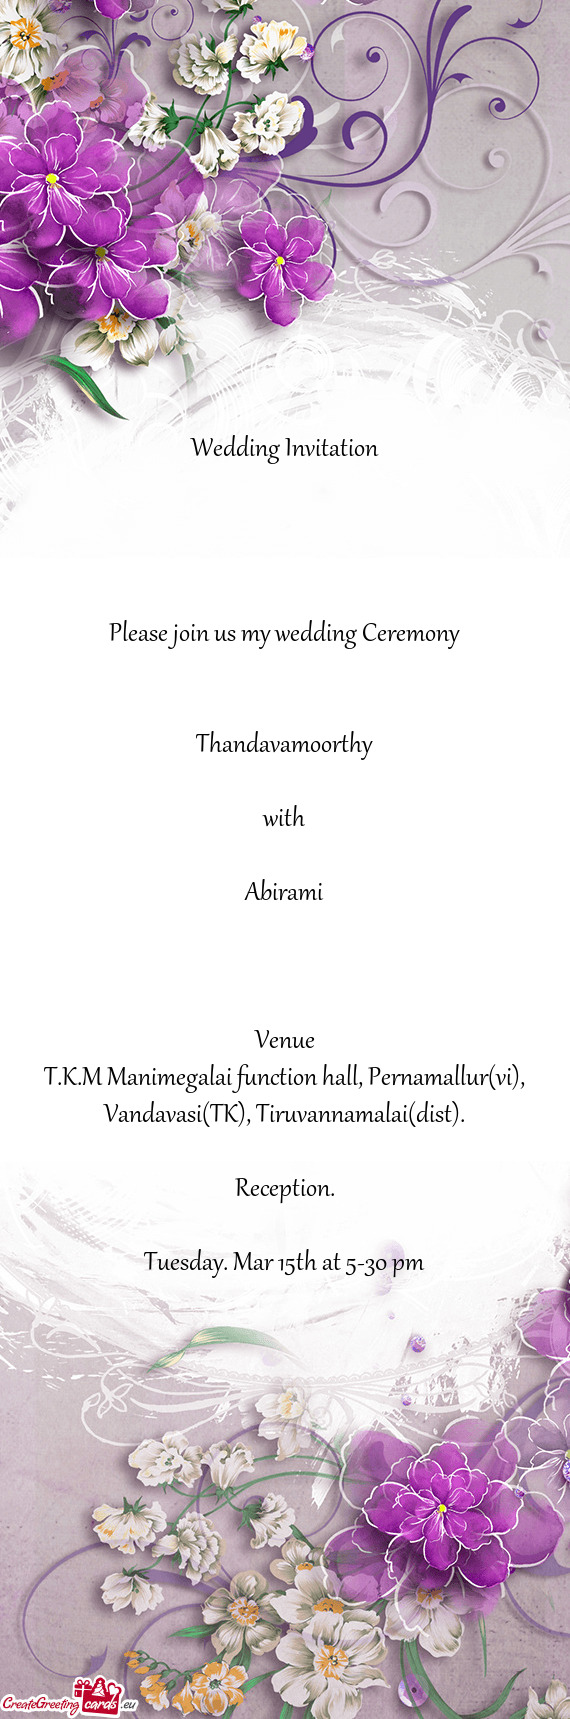 Please join us my wedding Ceremony